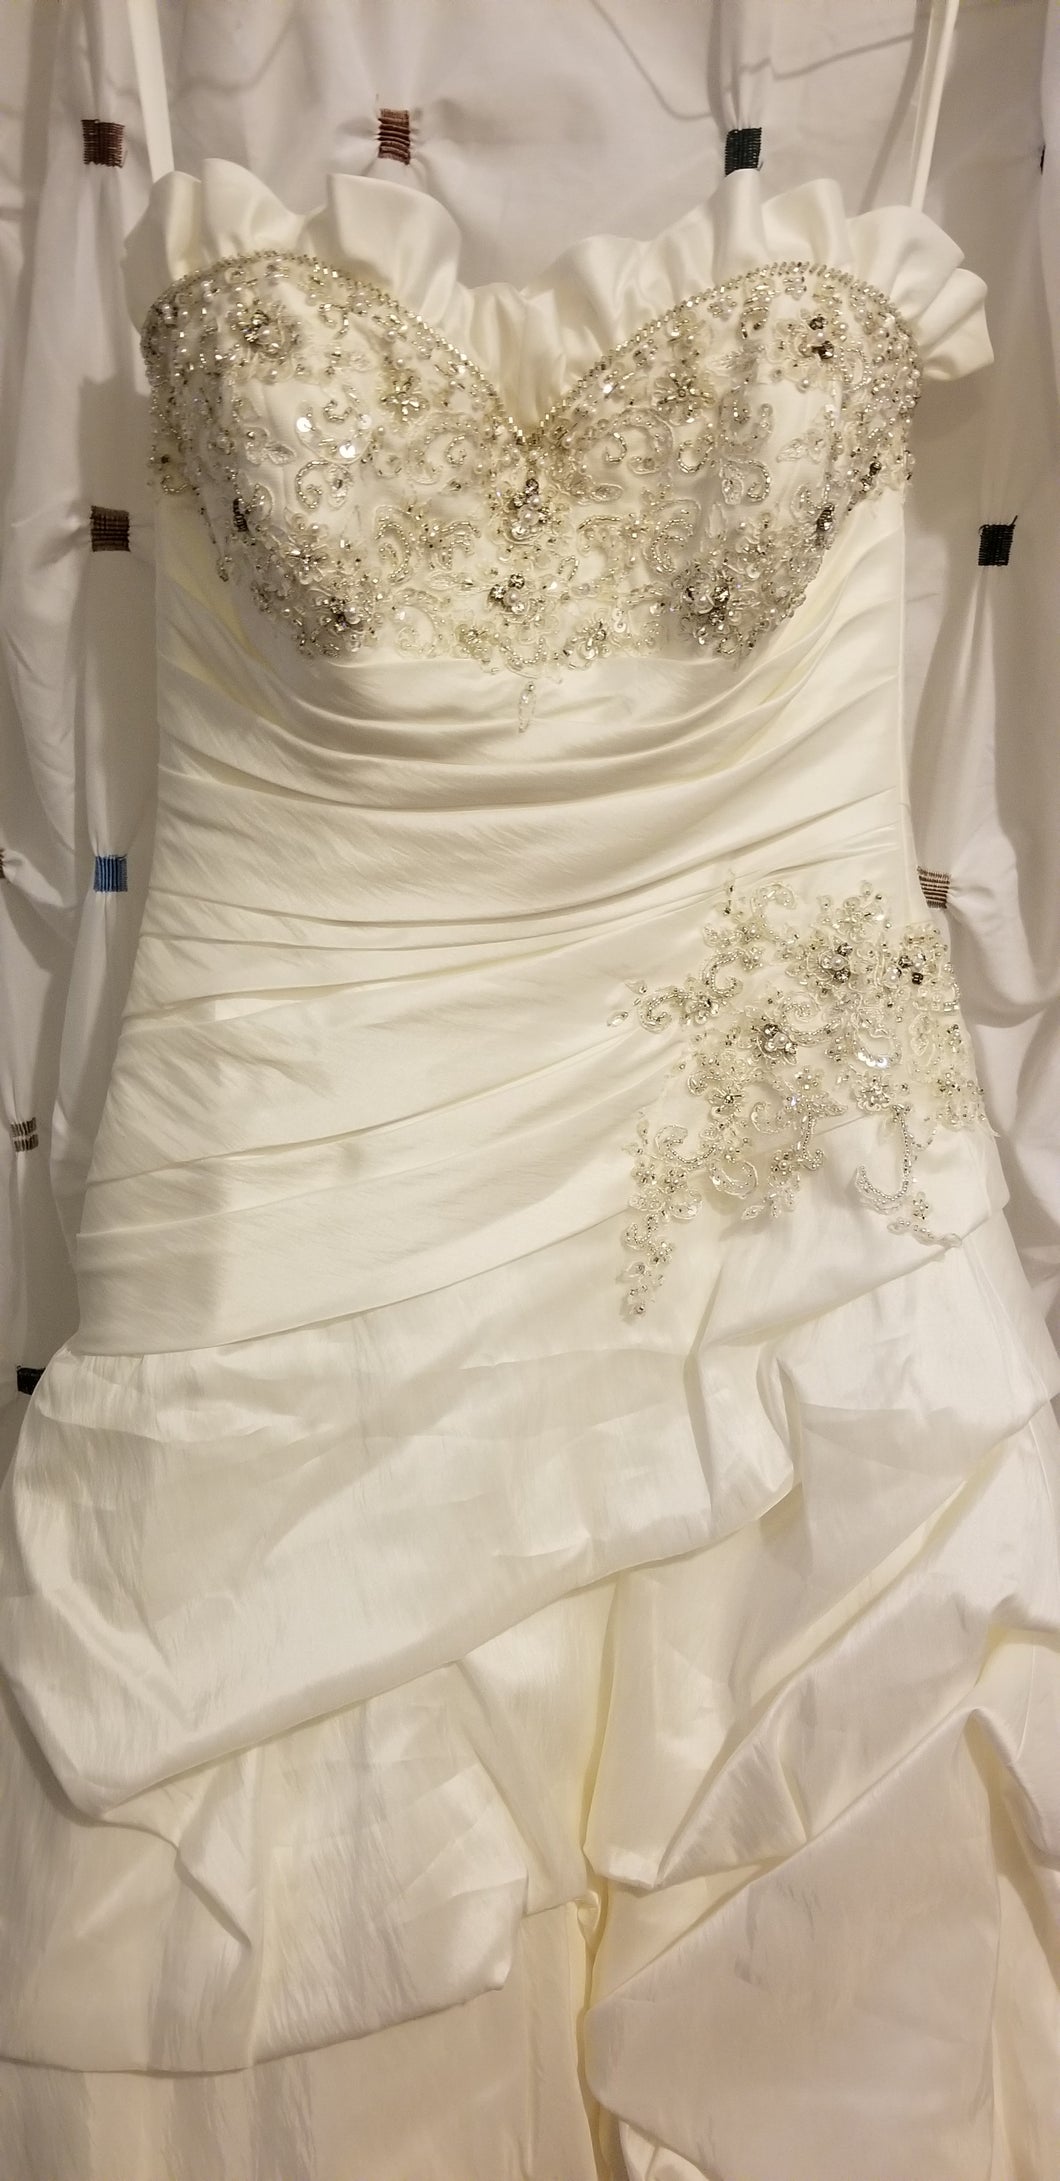 Mori Lee 'Ivory' size 2 used wedding dress – Nearly Newlywed